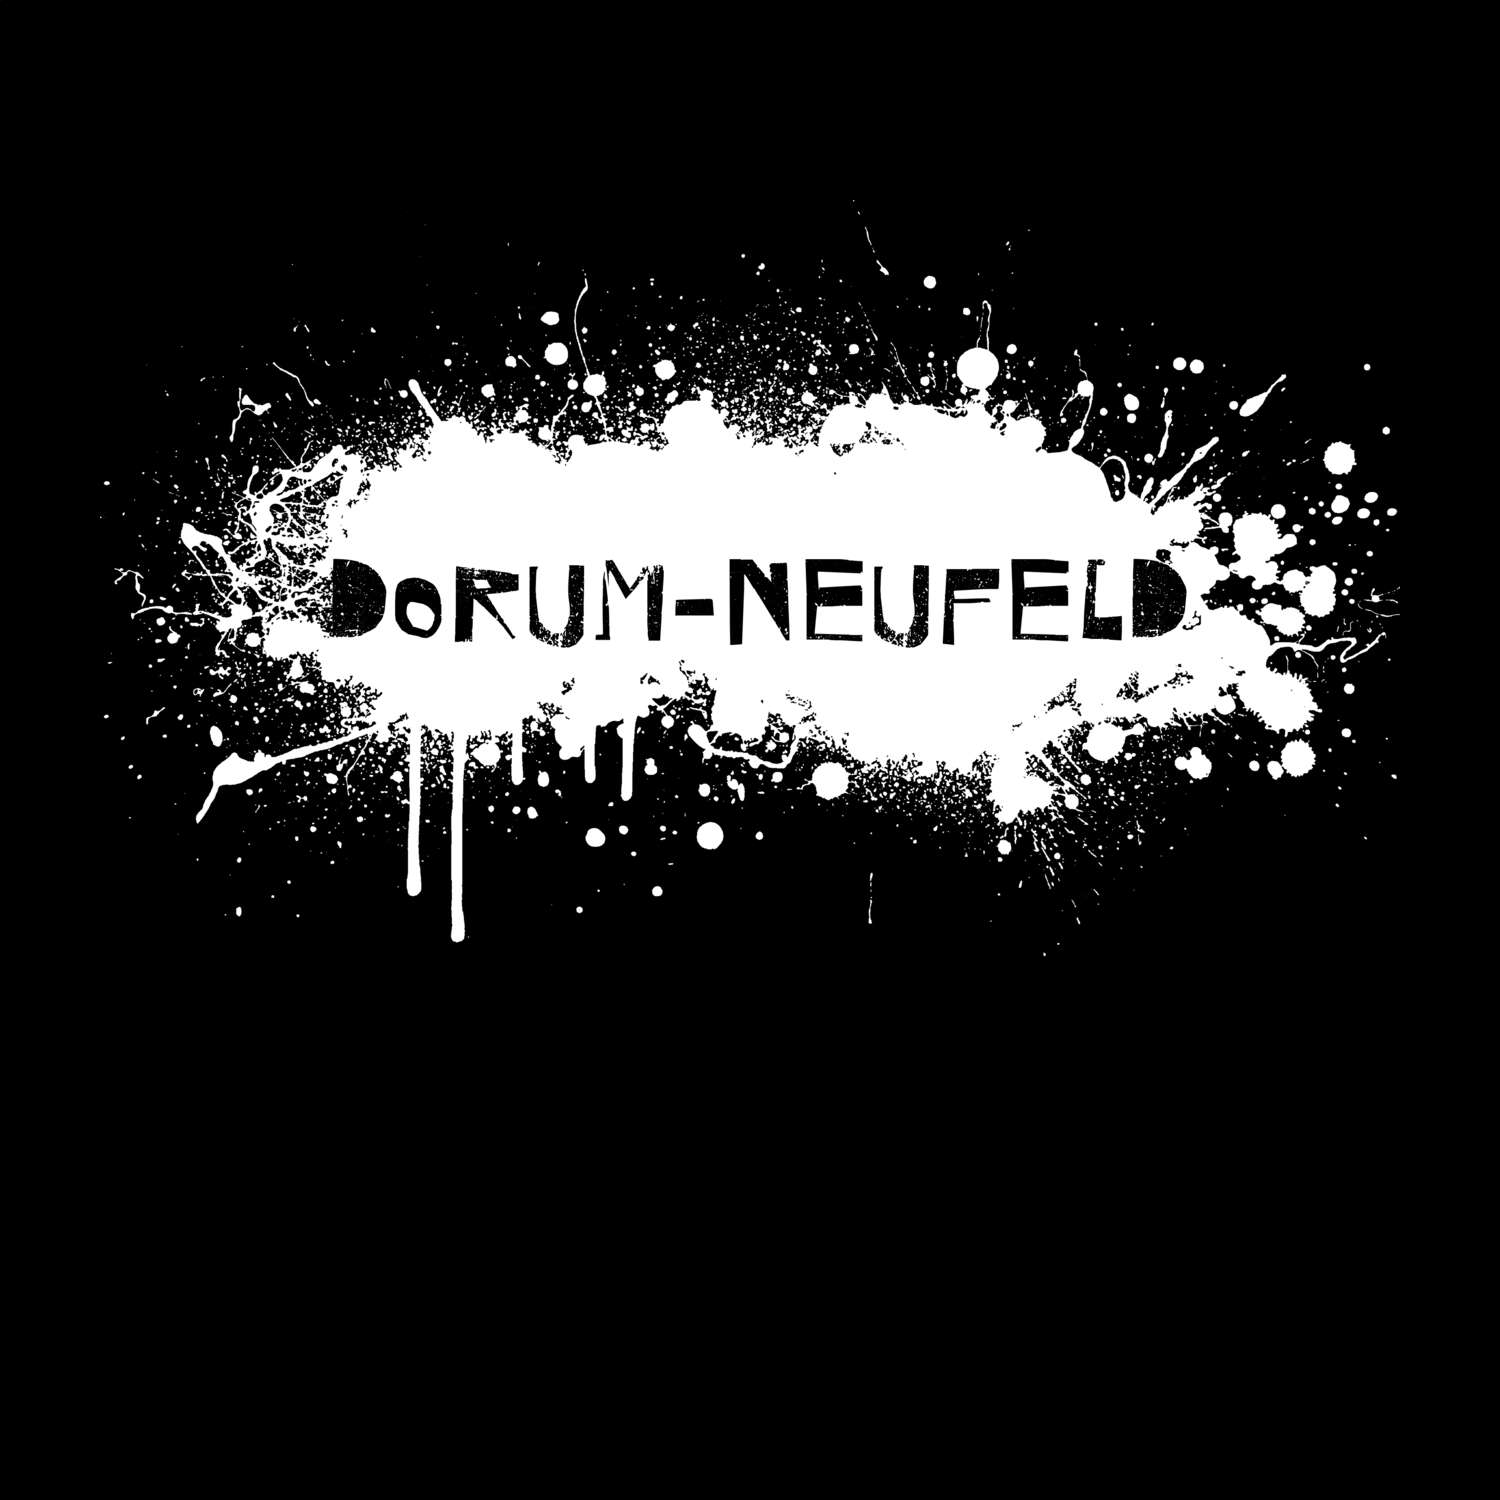 Dorum-Neufeld T-Shirt »Paint Splash Punk«